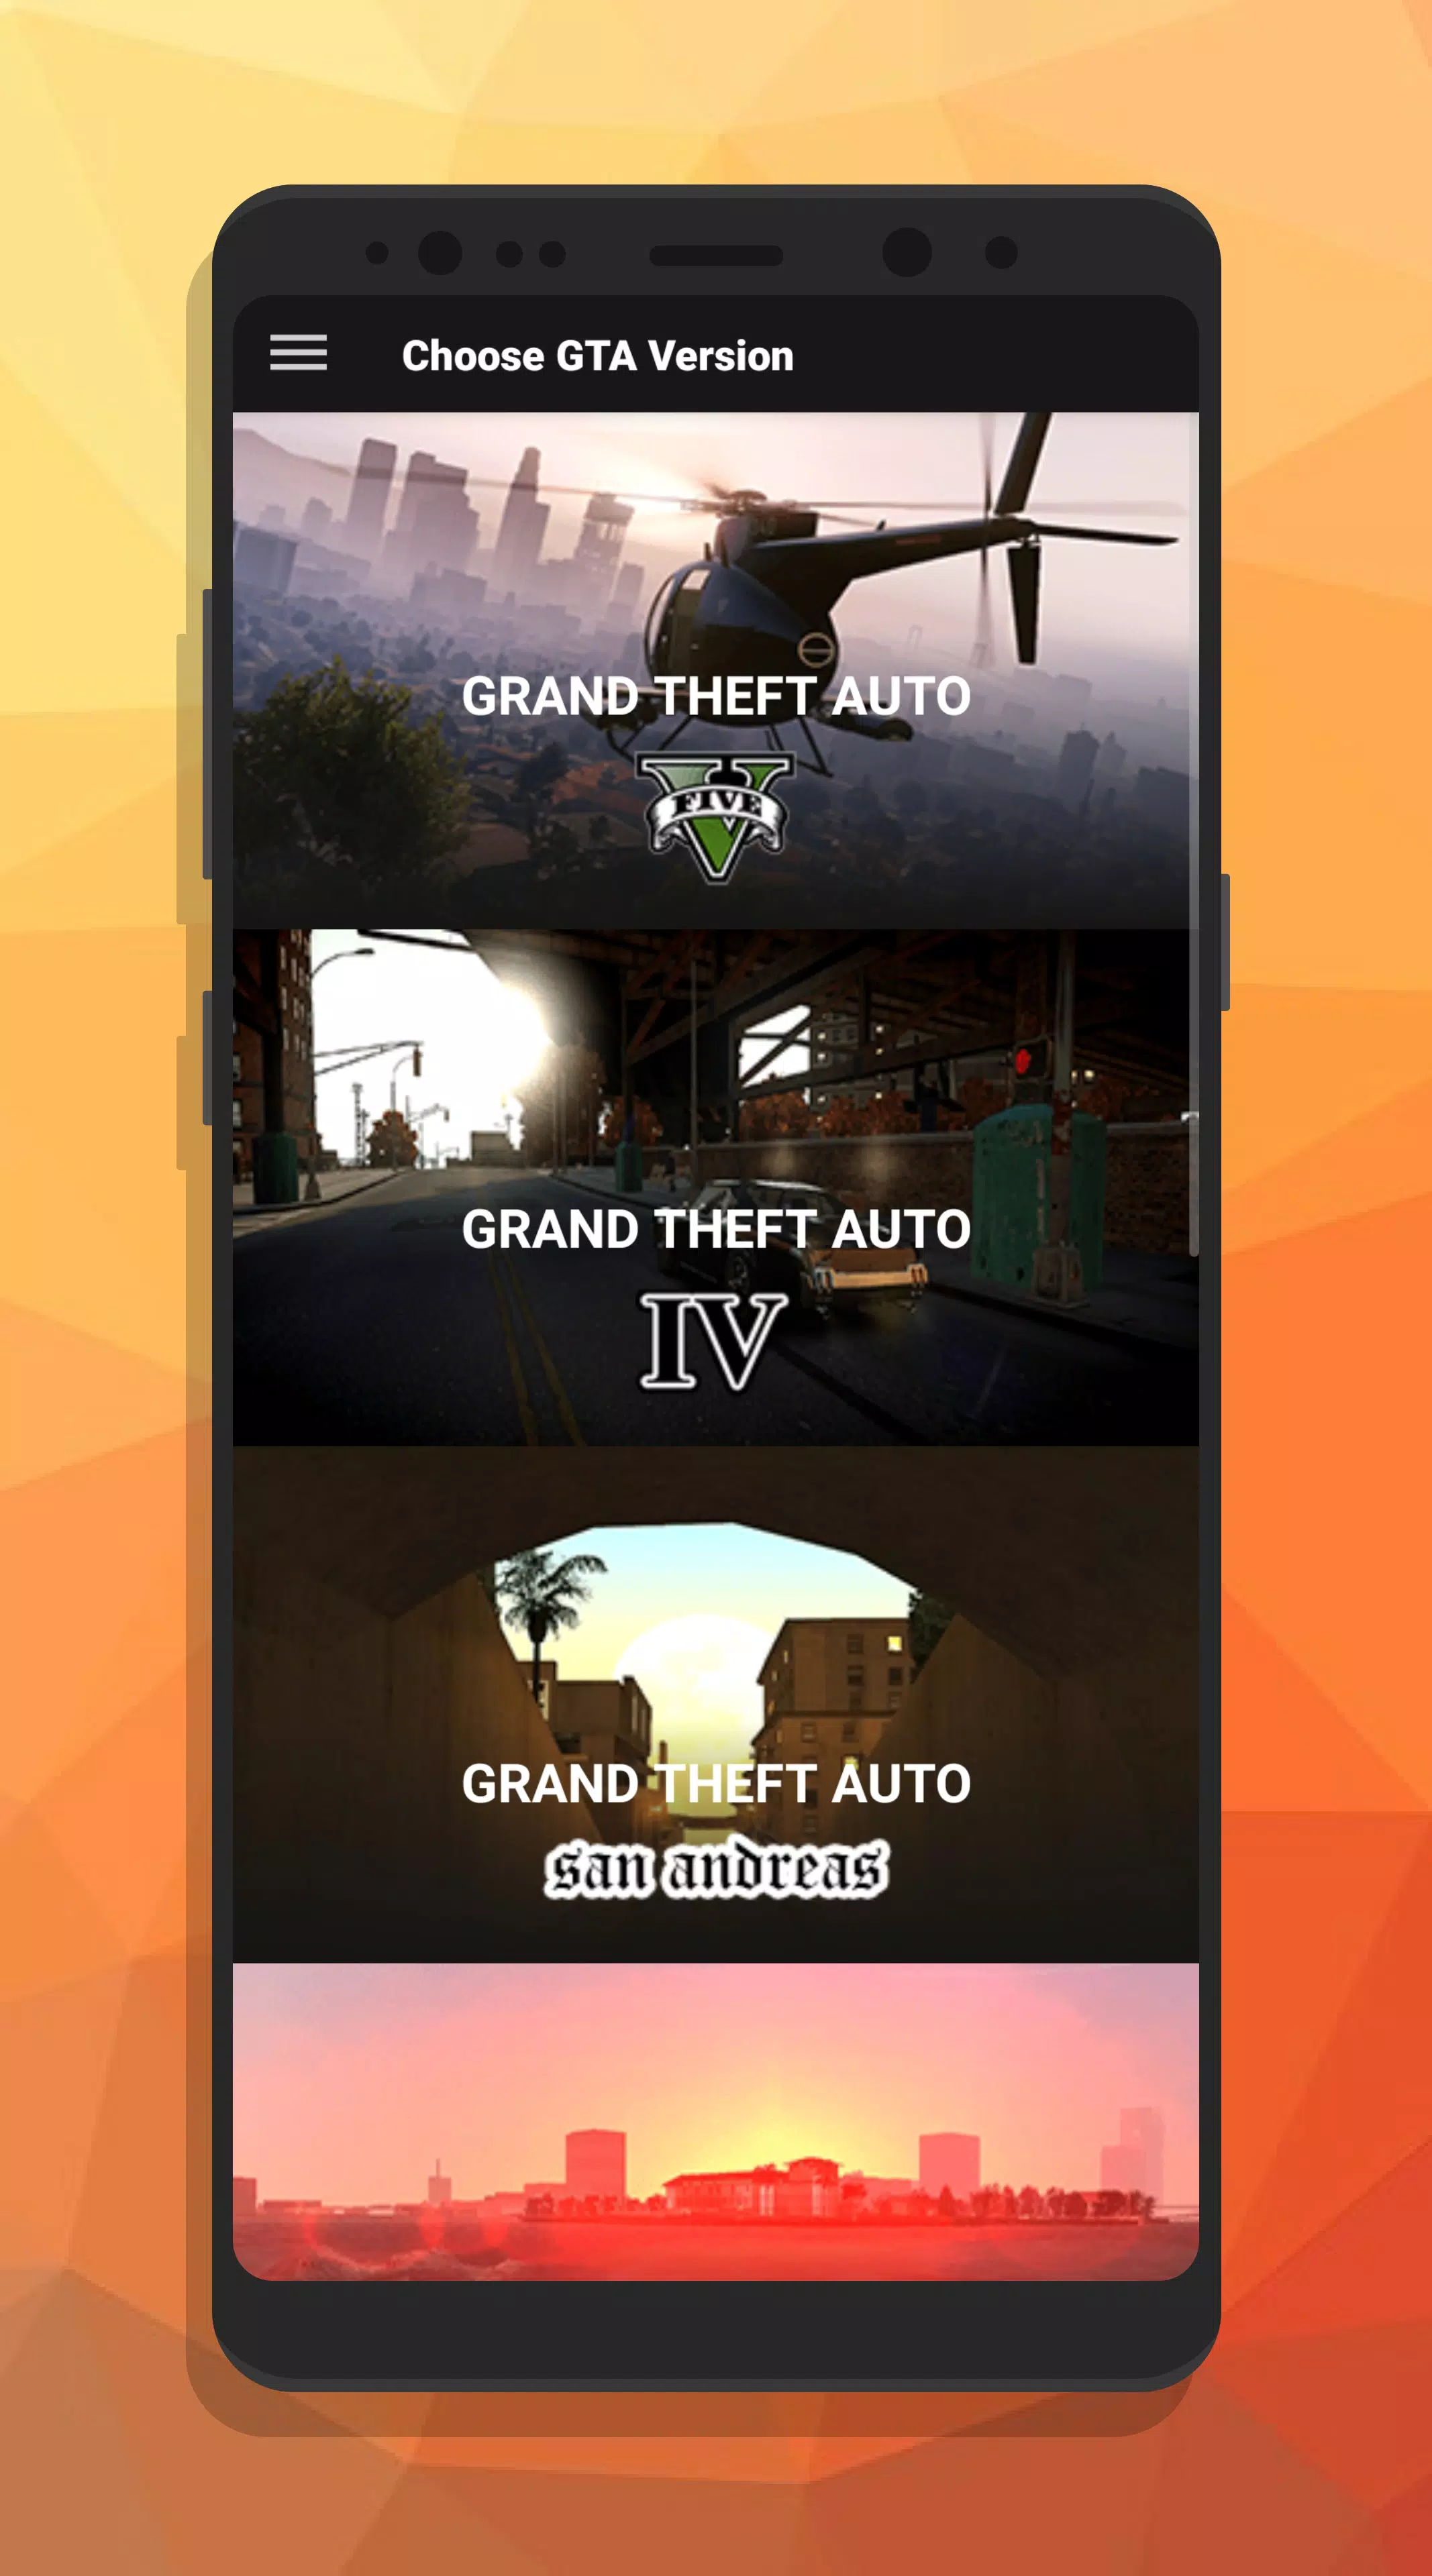 Download do APK de Cheats GTA V para Android